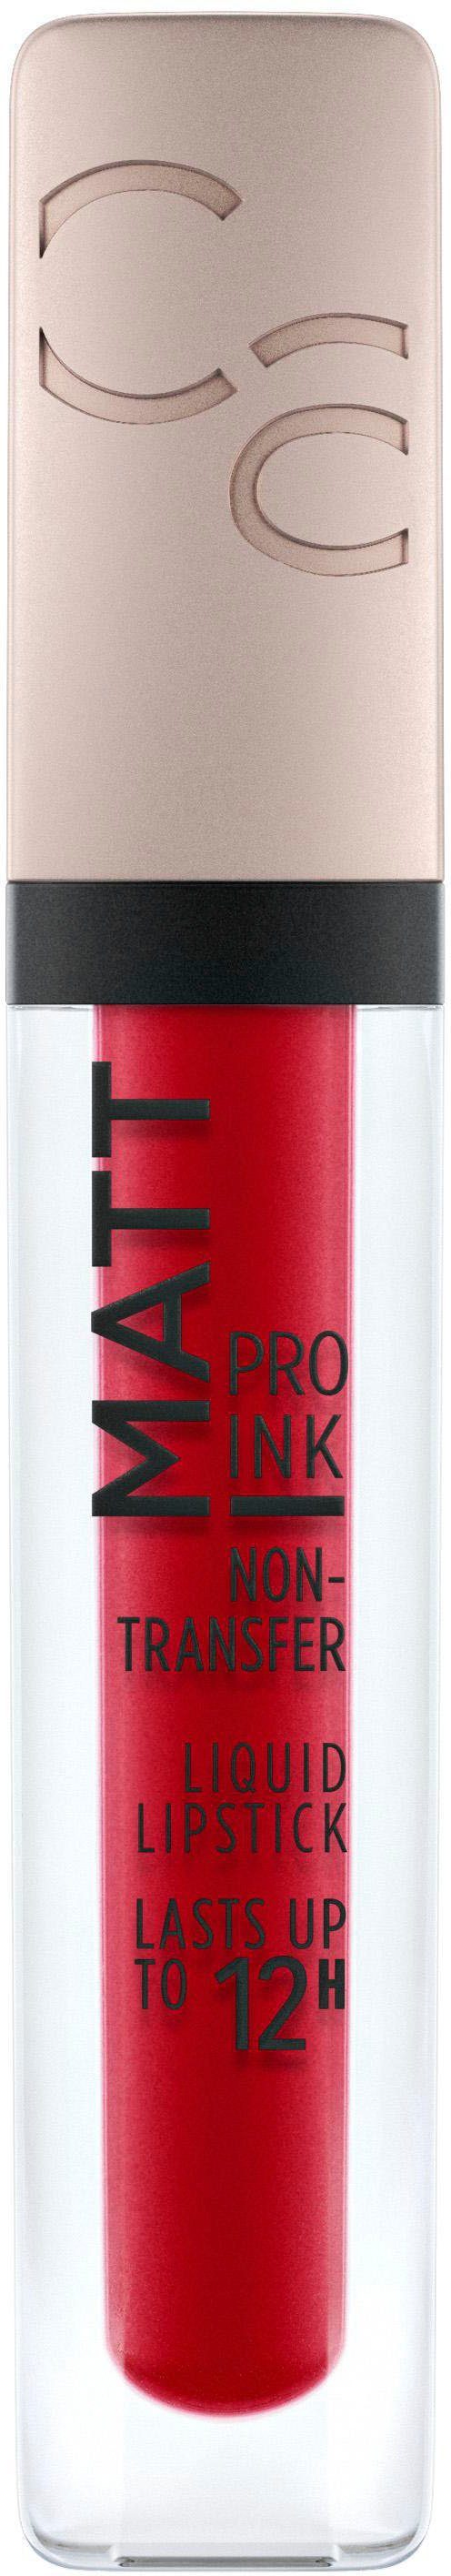 Matt Lipstick, Liquid Lippenstift Non-Transfer Ink Pro Catrice